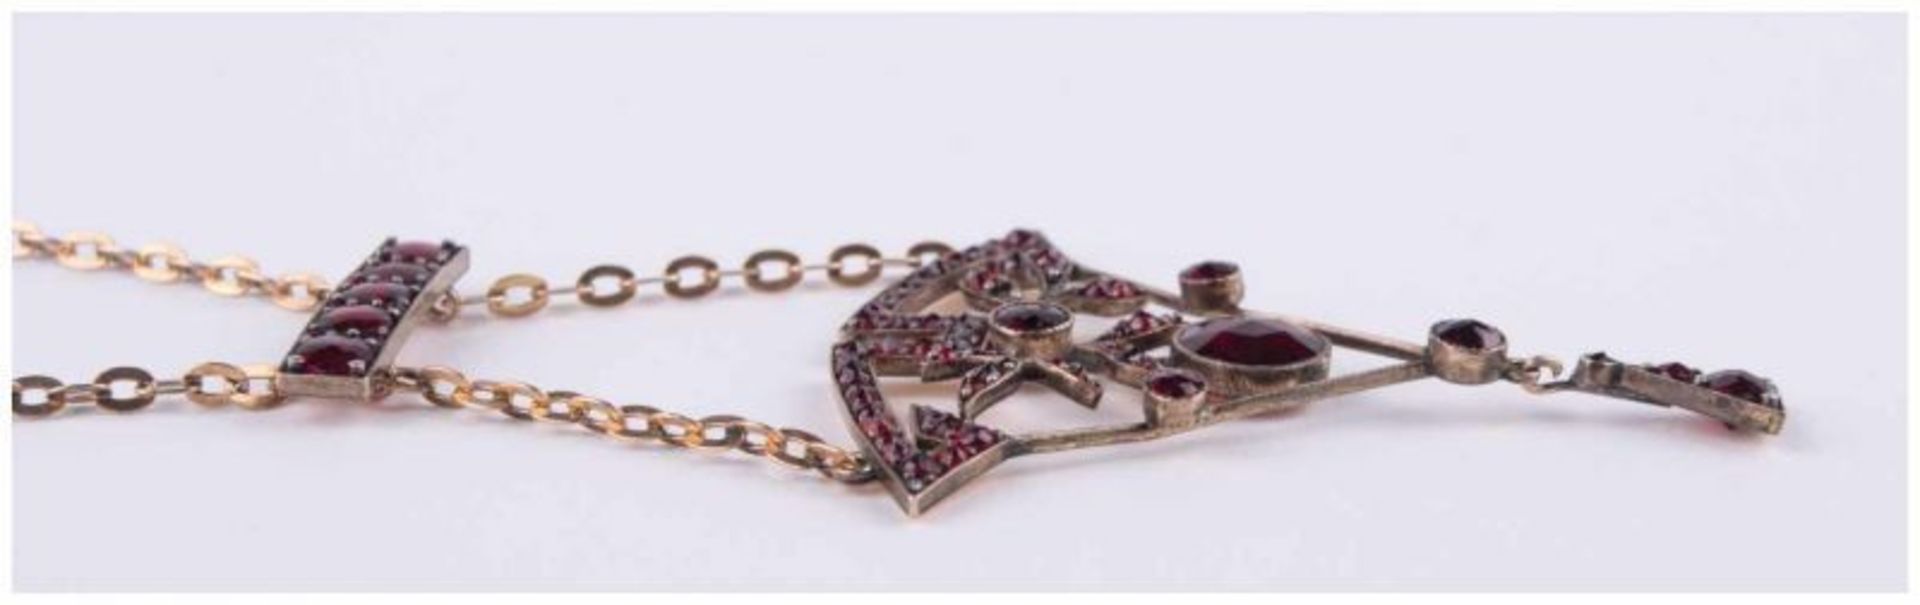 Jugendstil Granat-Collier / Art Nouveau garnet necklace - RG double, besetzt mit [...] - Image 4 of 8